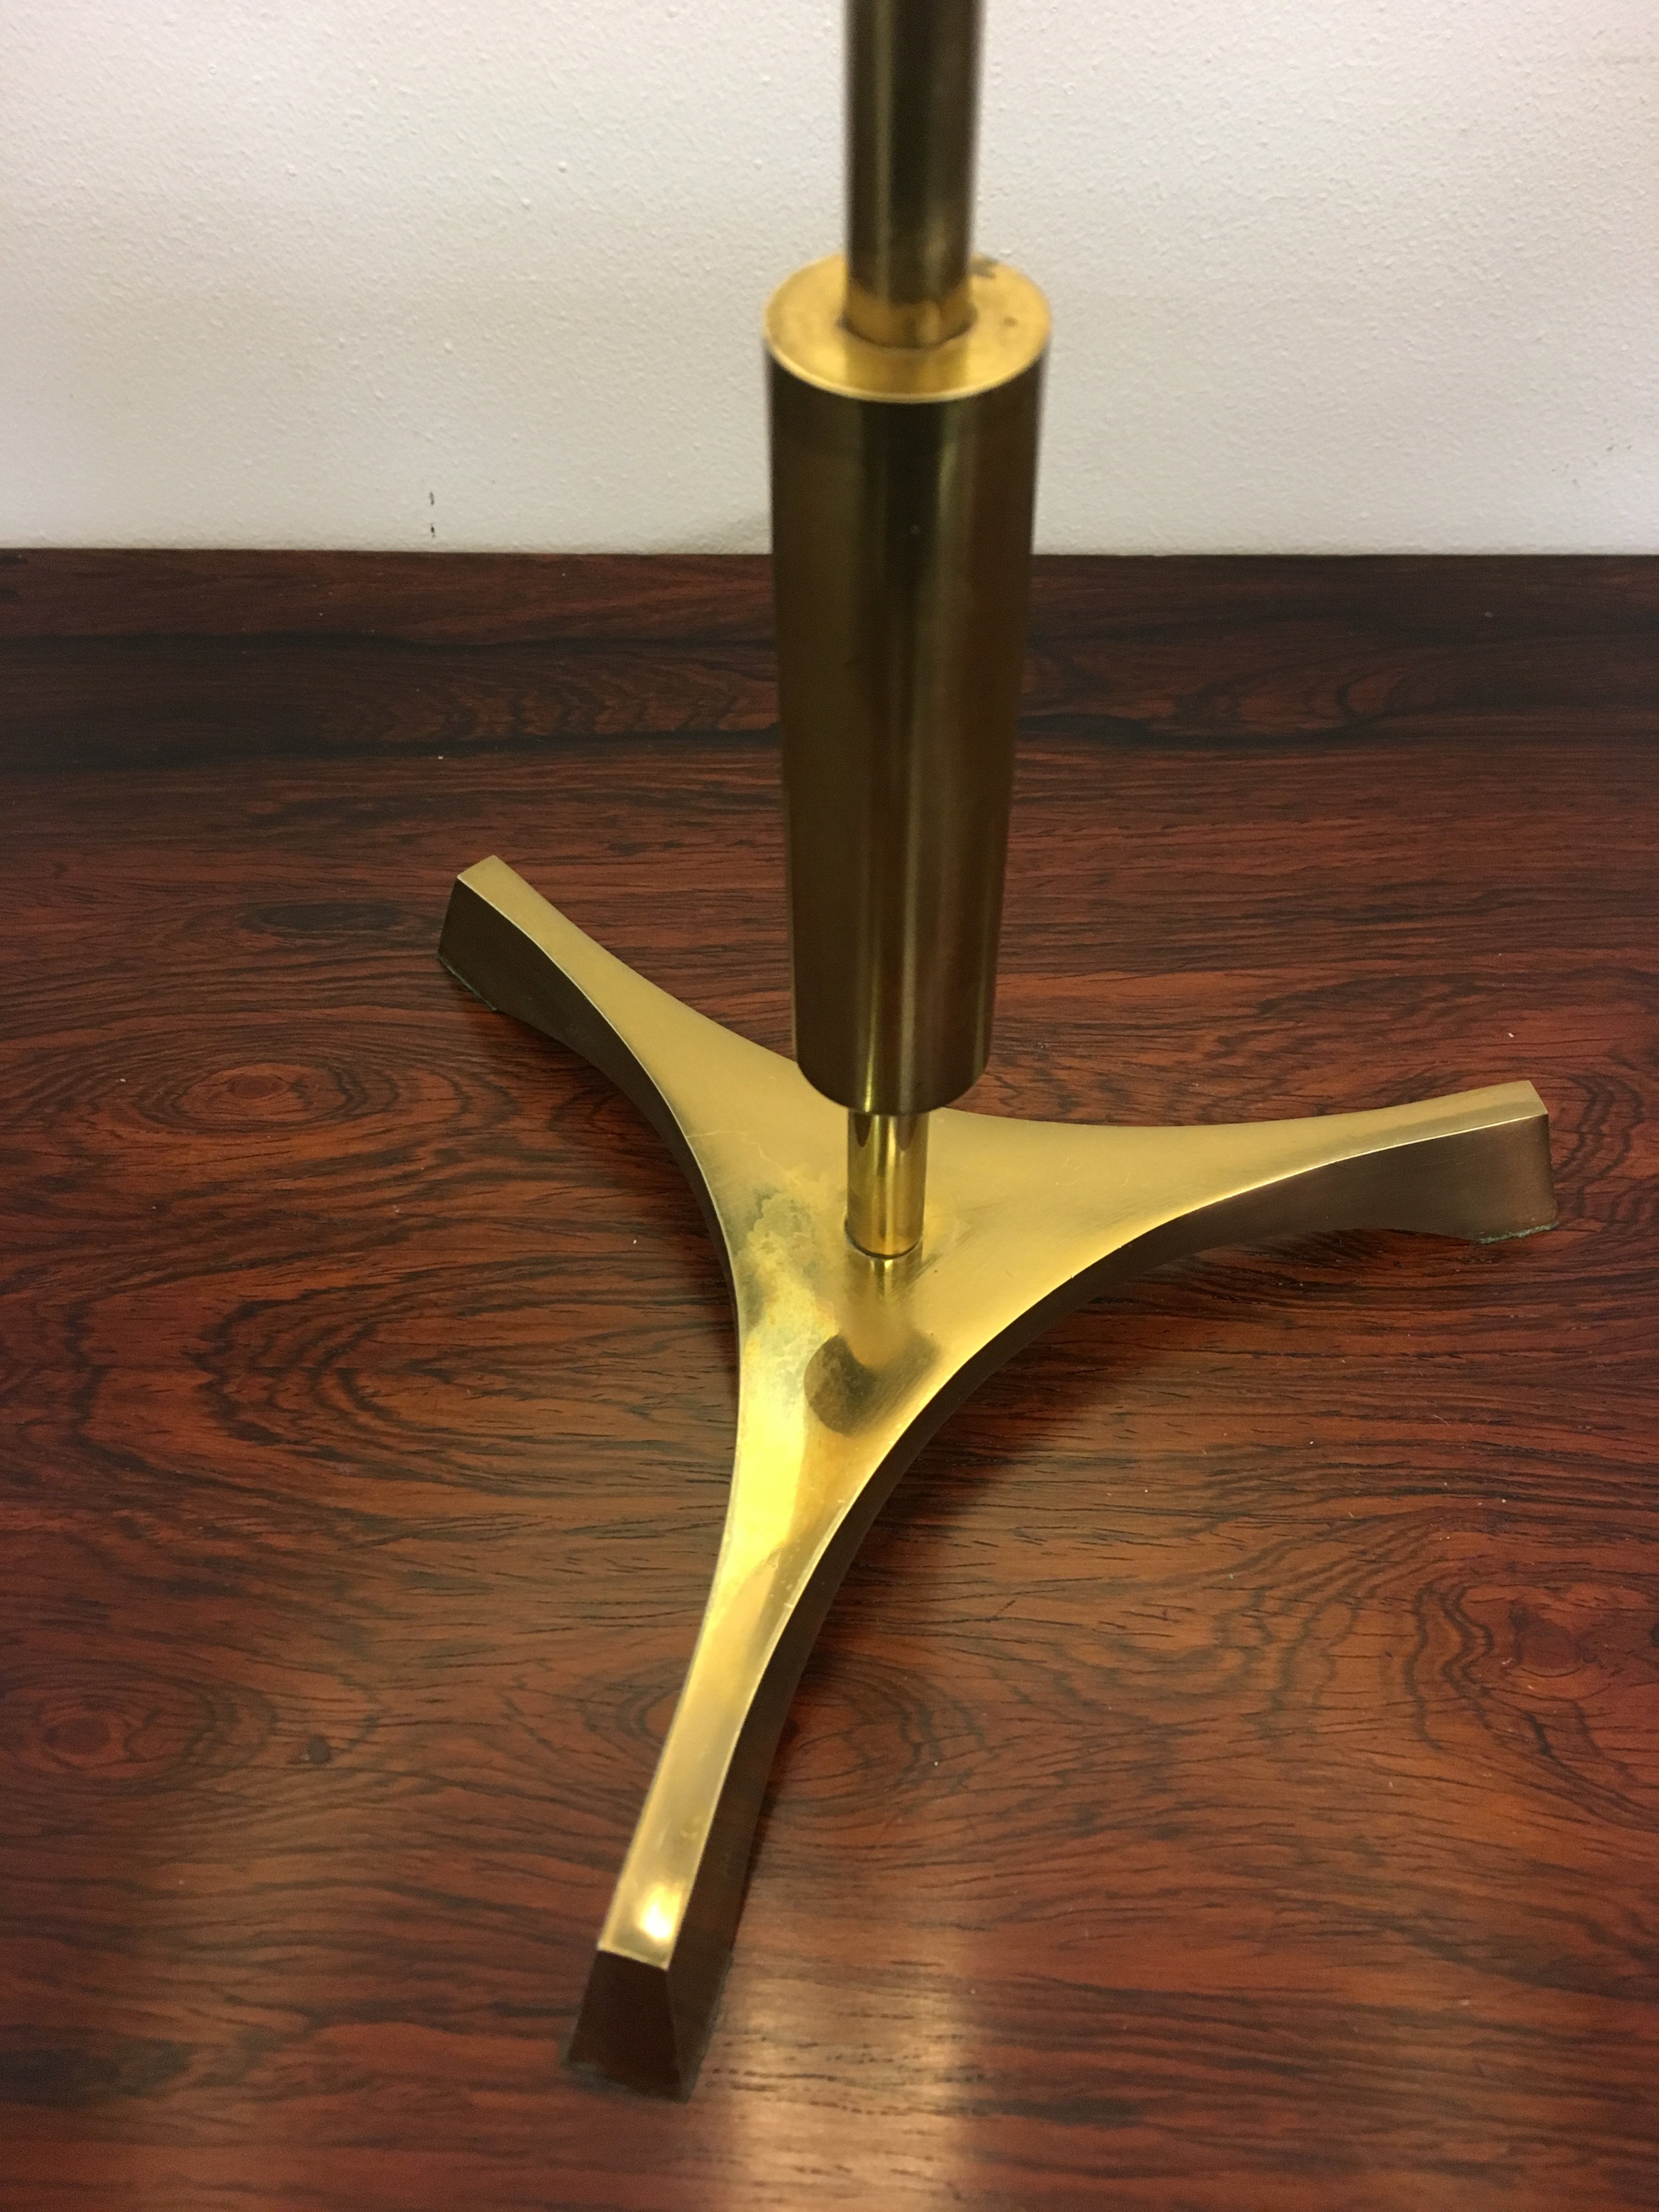 Brass Tripod Table Lamp